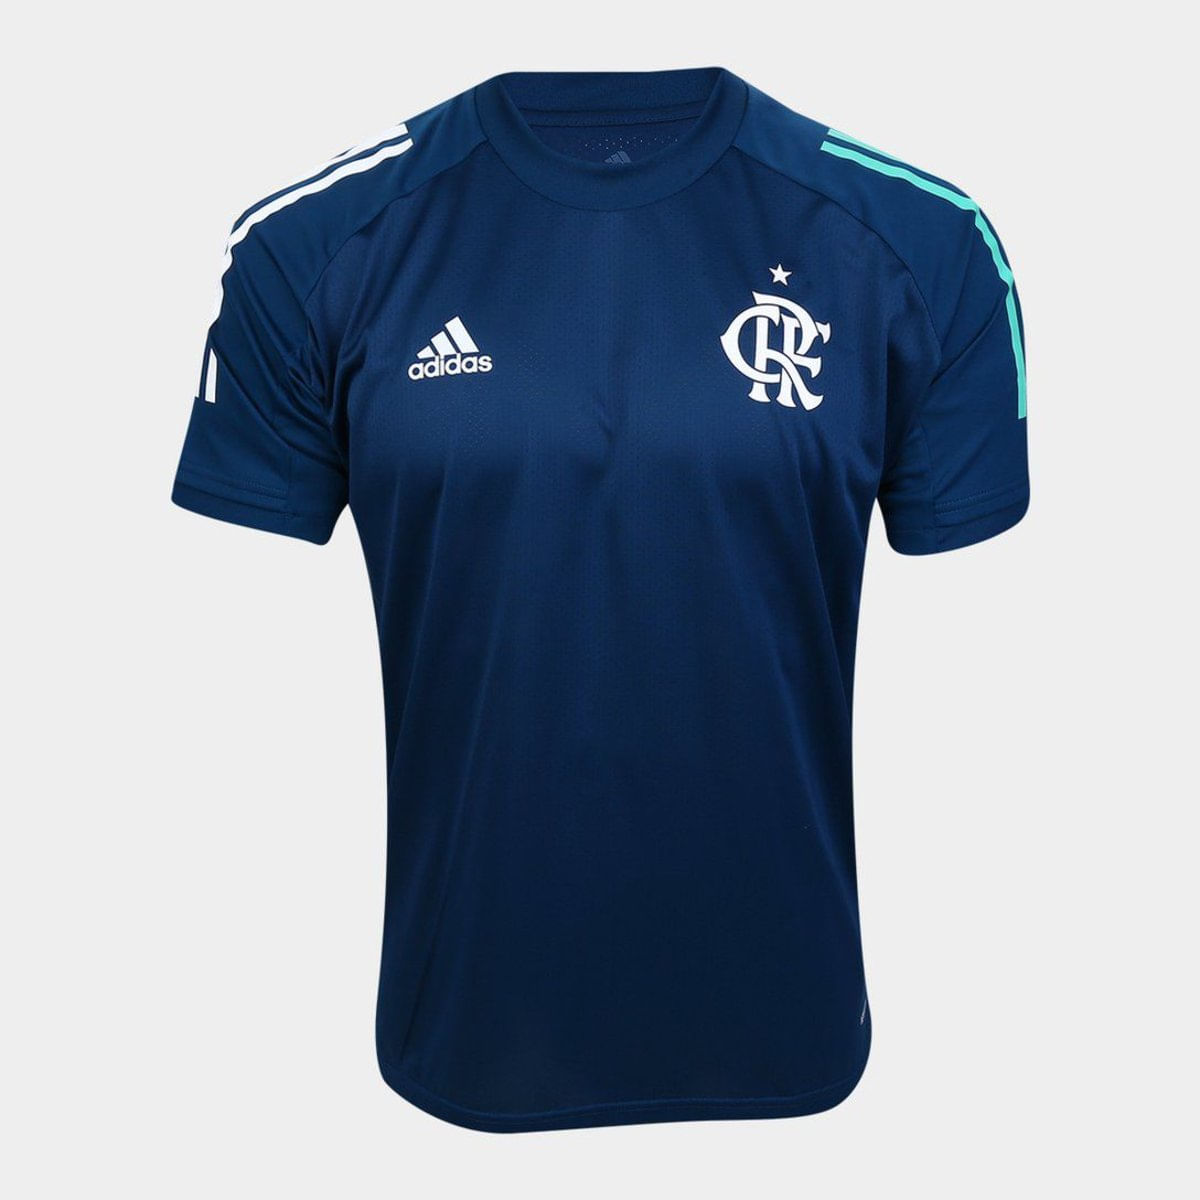 dividend Mariner Healthy Camisa Flamengo Treino 20/21 Adidas Masculina - Azul - Carrefour